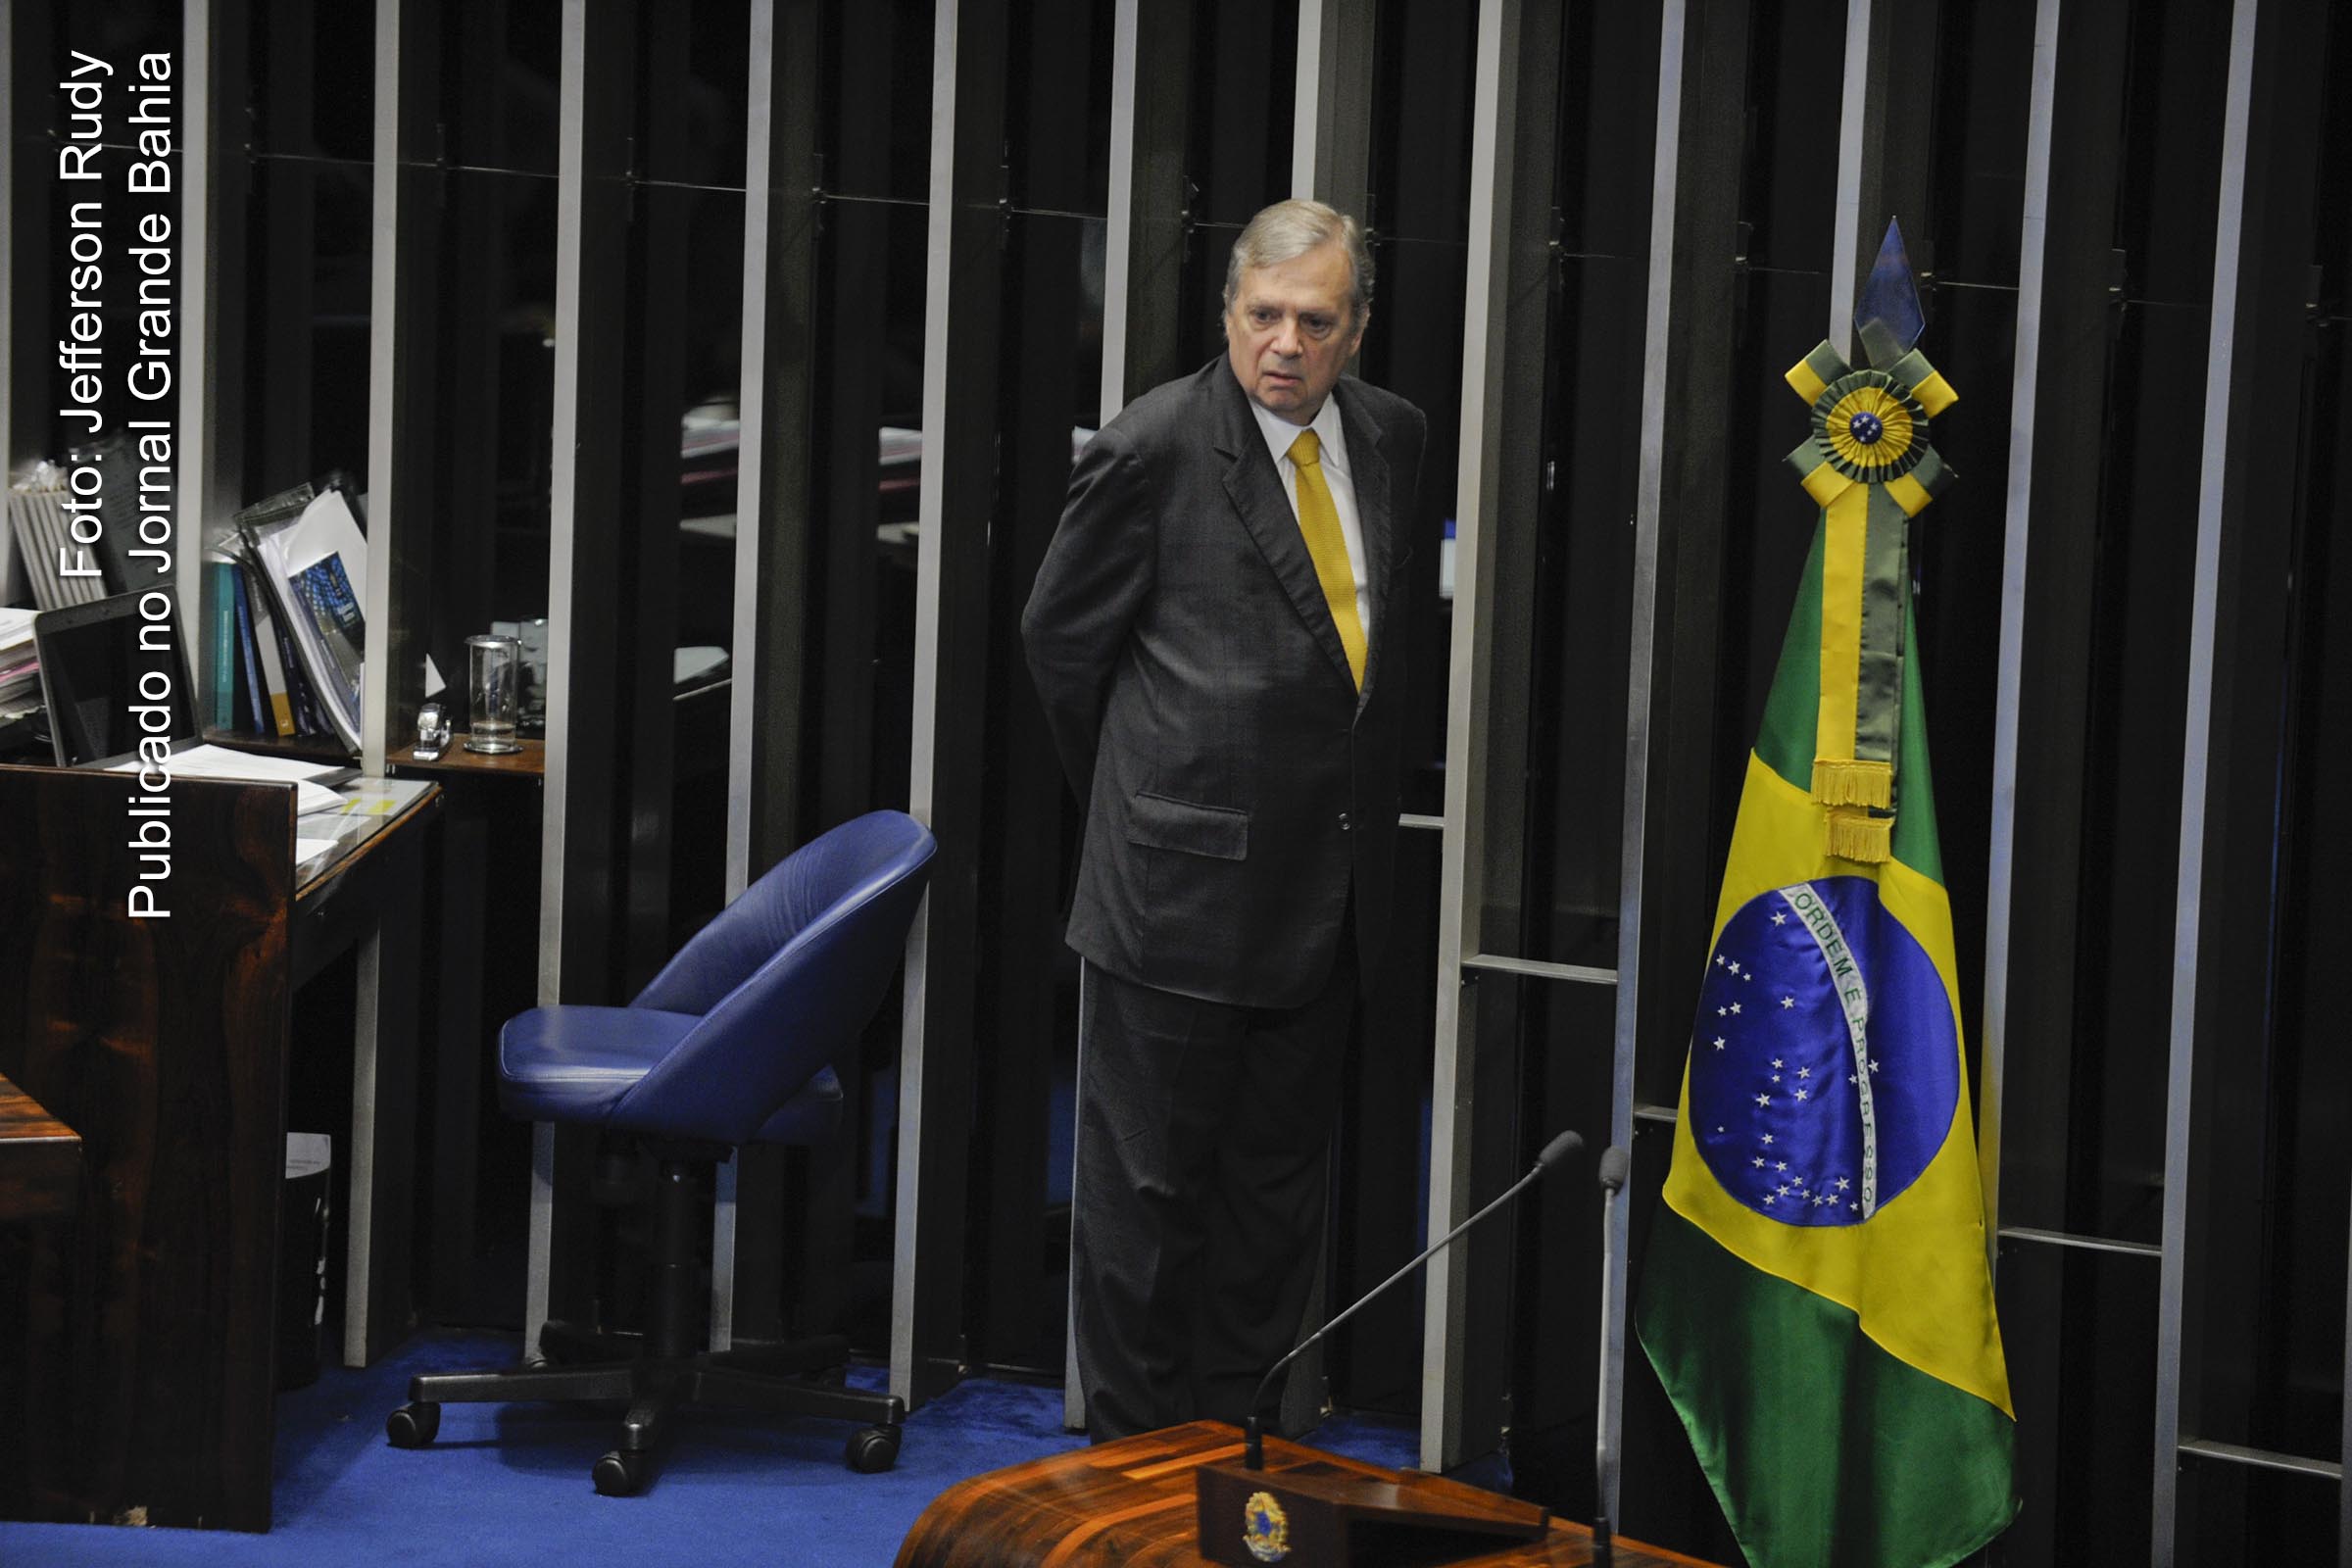 Senador Tasso Jereissati lança candidatura à presidência do PSDB.